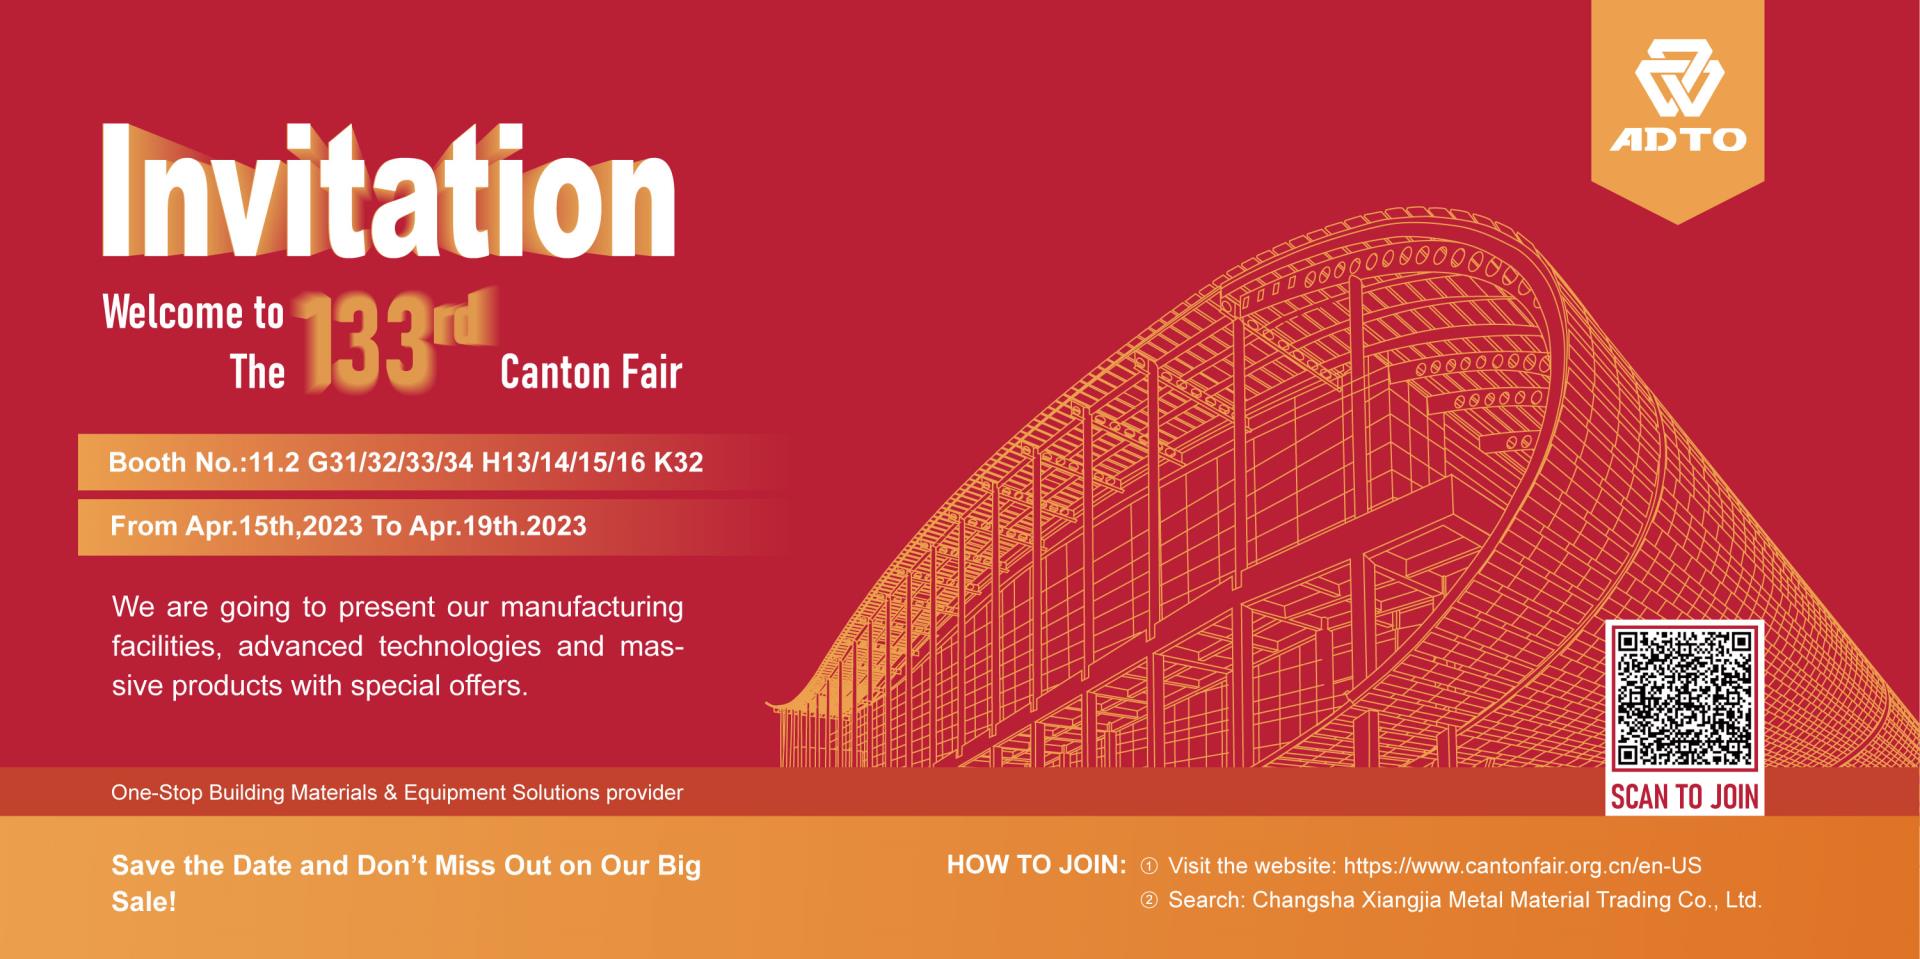 Canton Fair Invitation.jpg